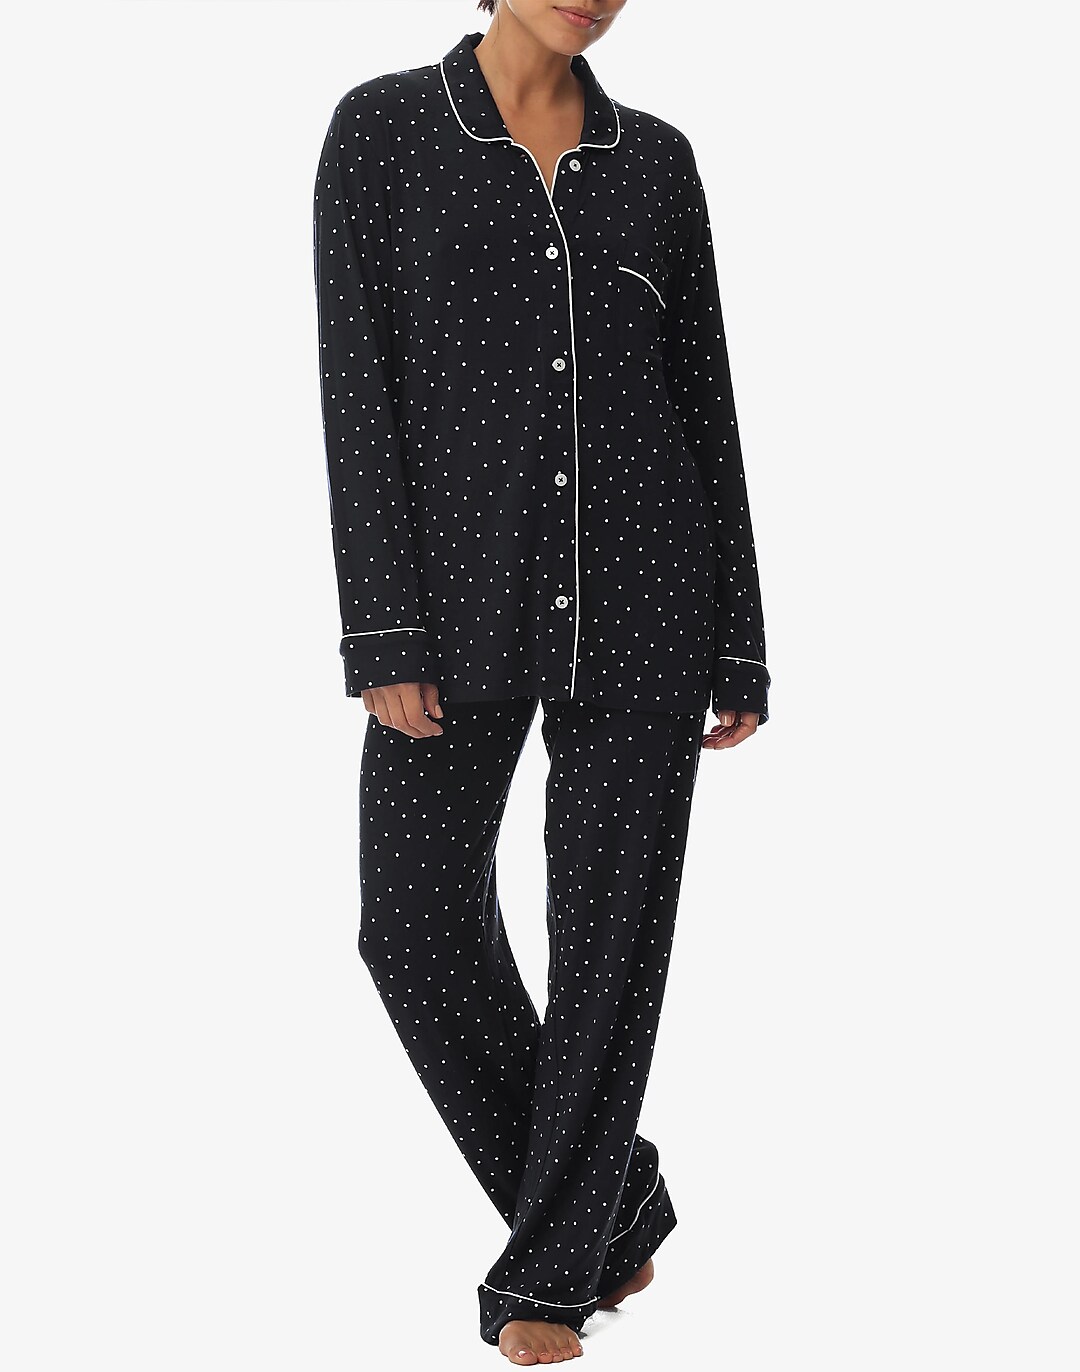 Papinelle Sleepwear™ Modal Kate Pajamas in Print